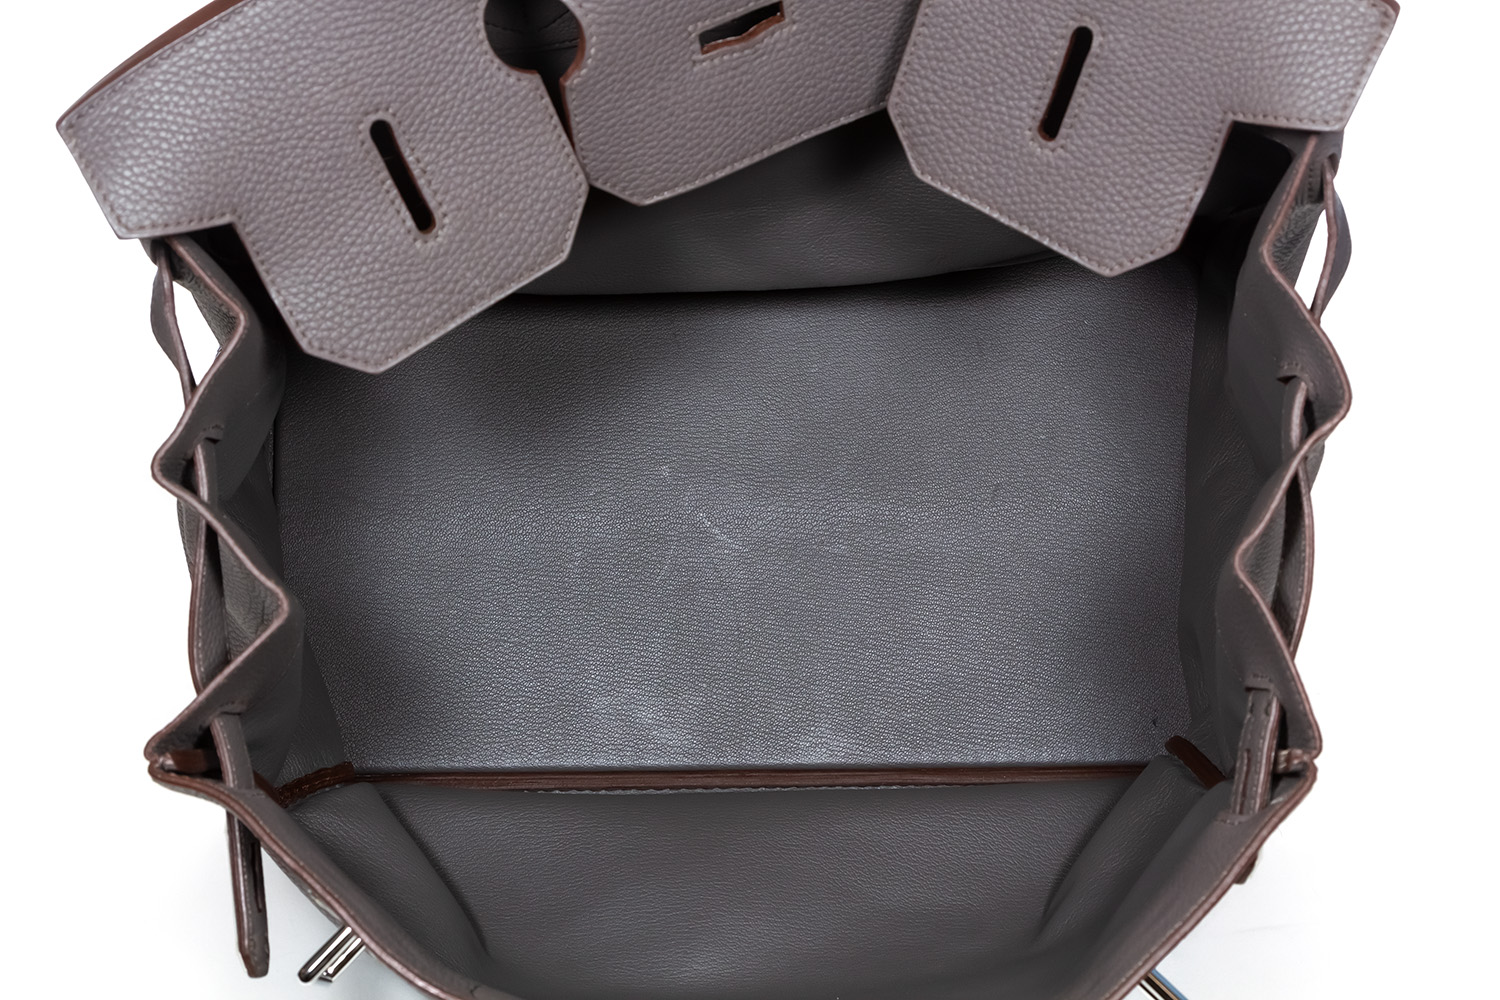 Hermès Gris Etain Birkin 40cm of Togo Leather with Gold Hardware, Handbags  & Accessories Online, Ecommerce Retail